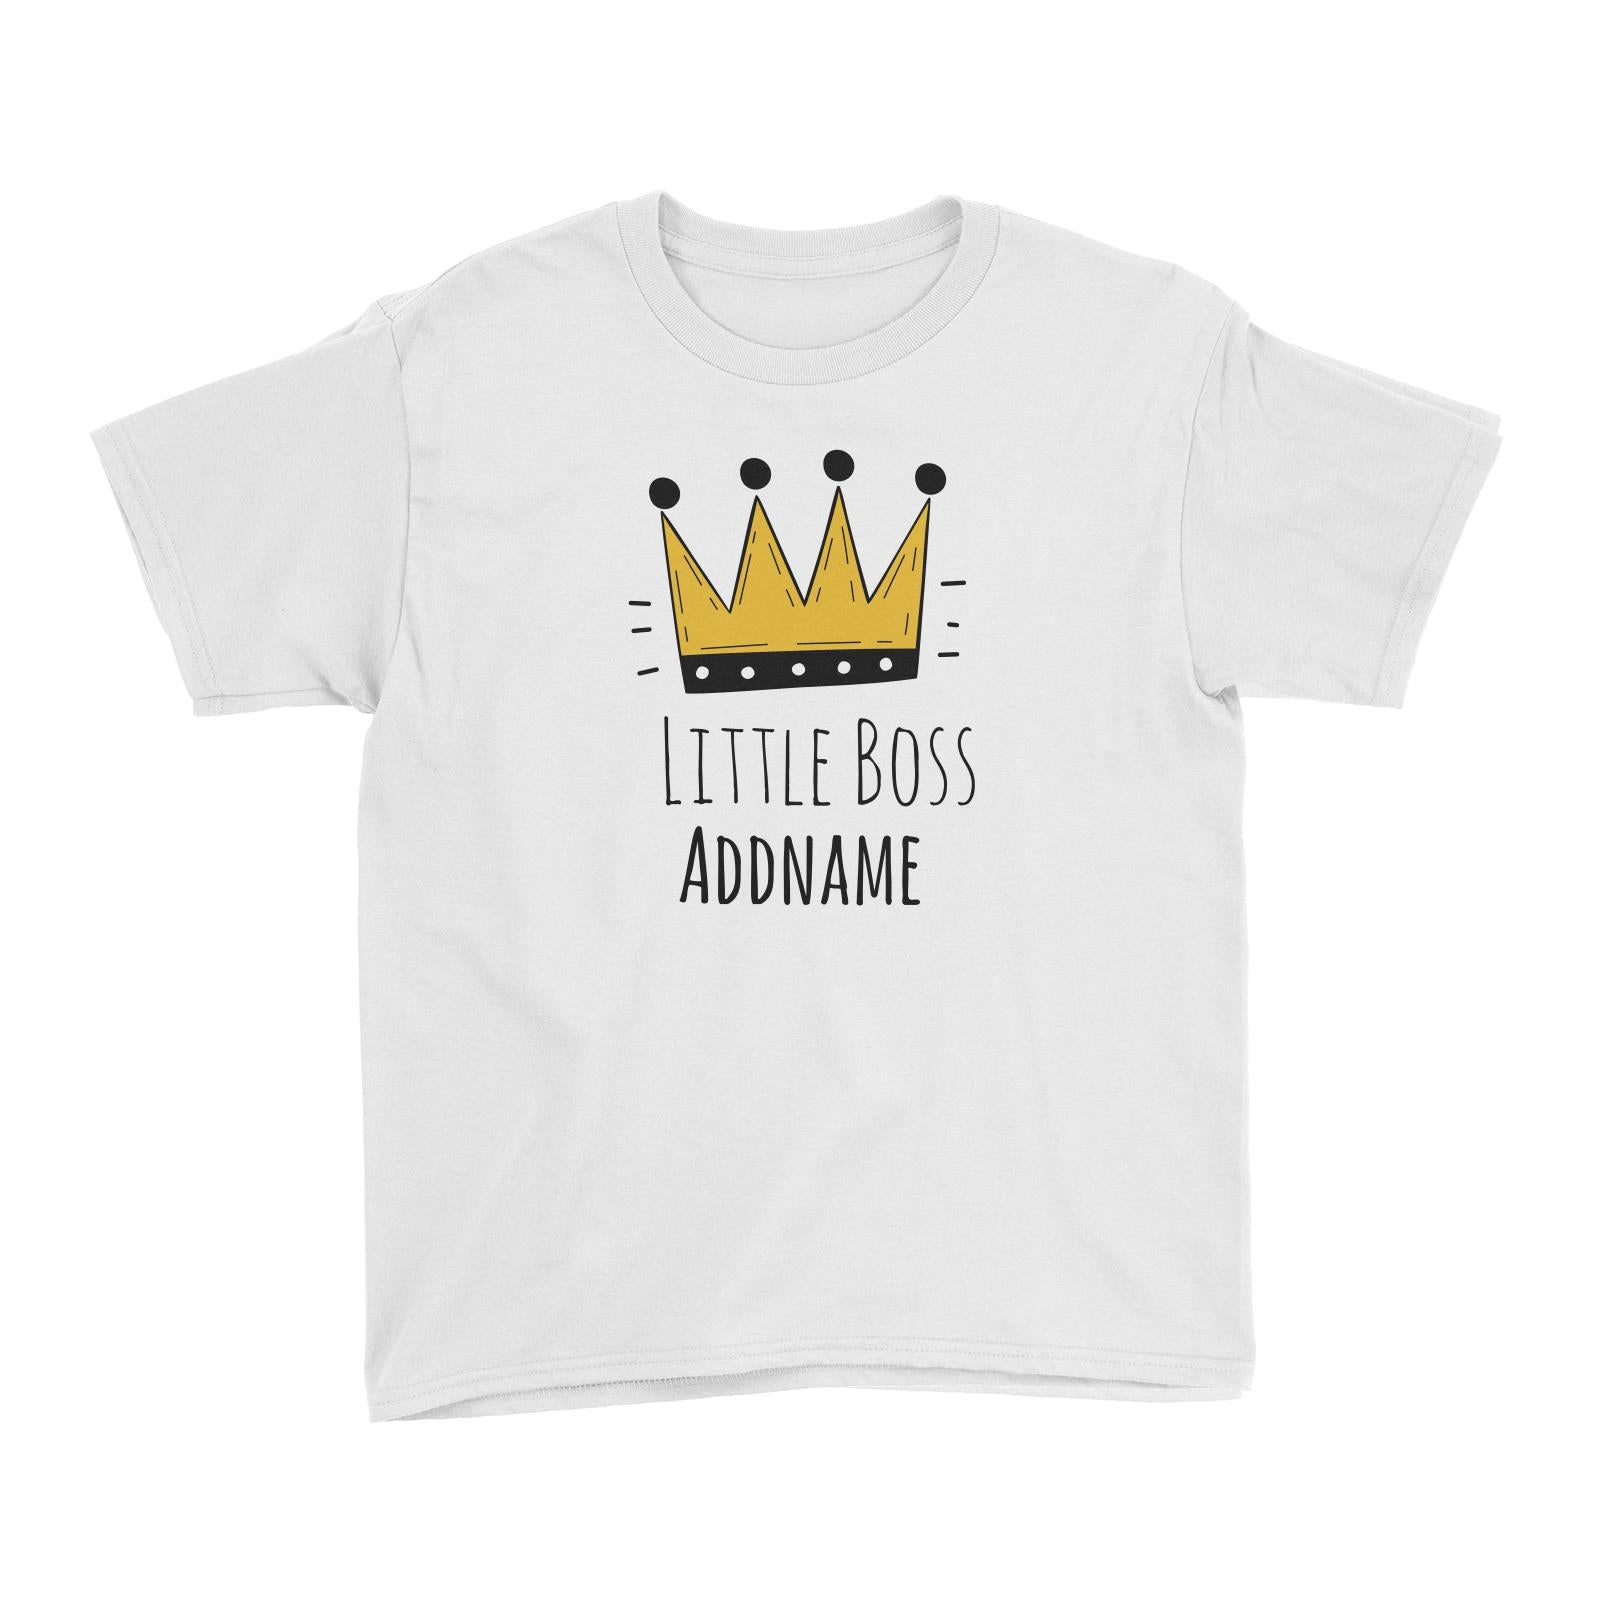 Drawn Crown Little Boss Addname Kid's T-Shirt